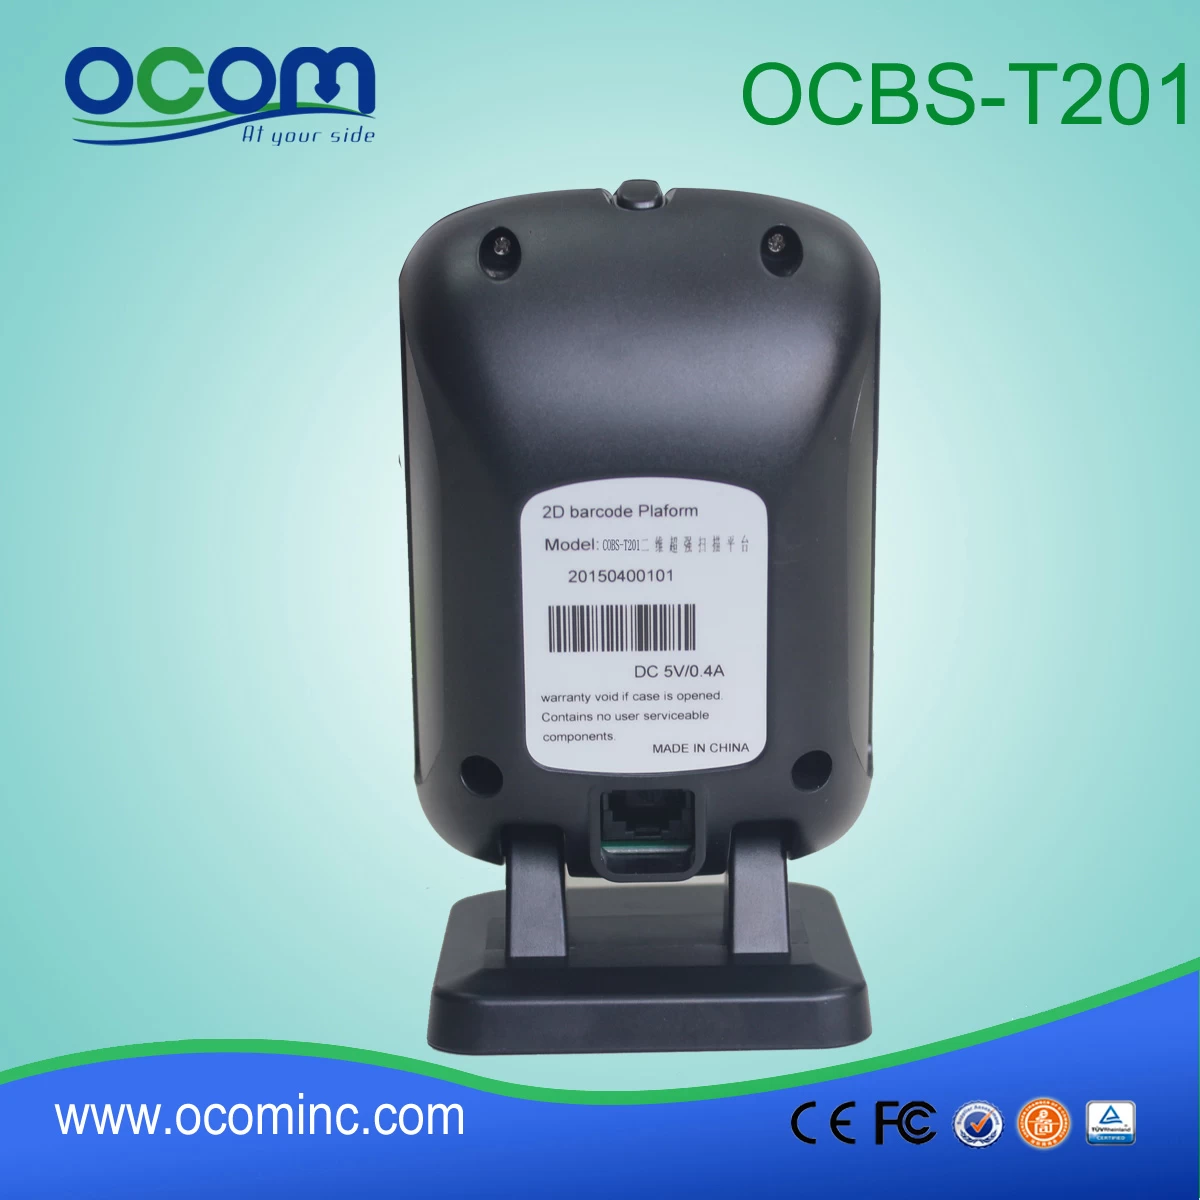 OCBS-T201:omnidirectional barcode scanner suppliers, barcode reader module